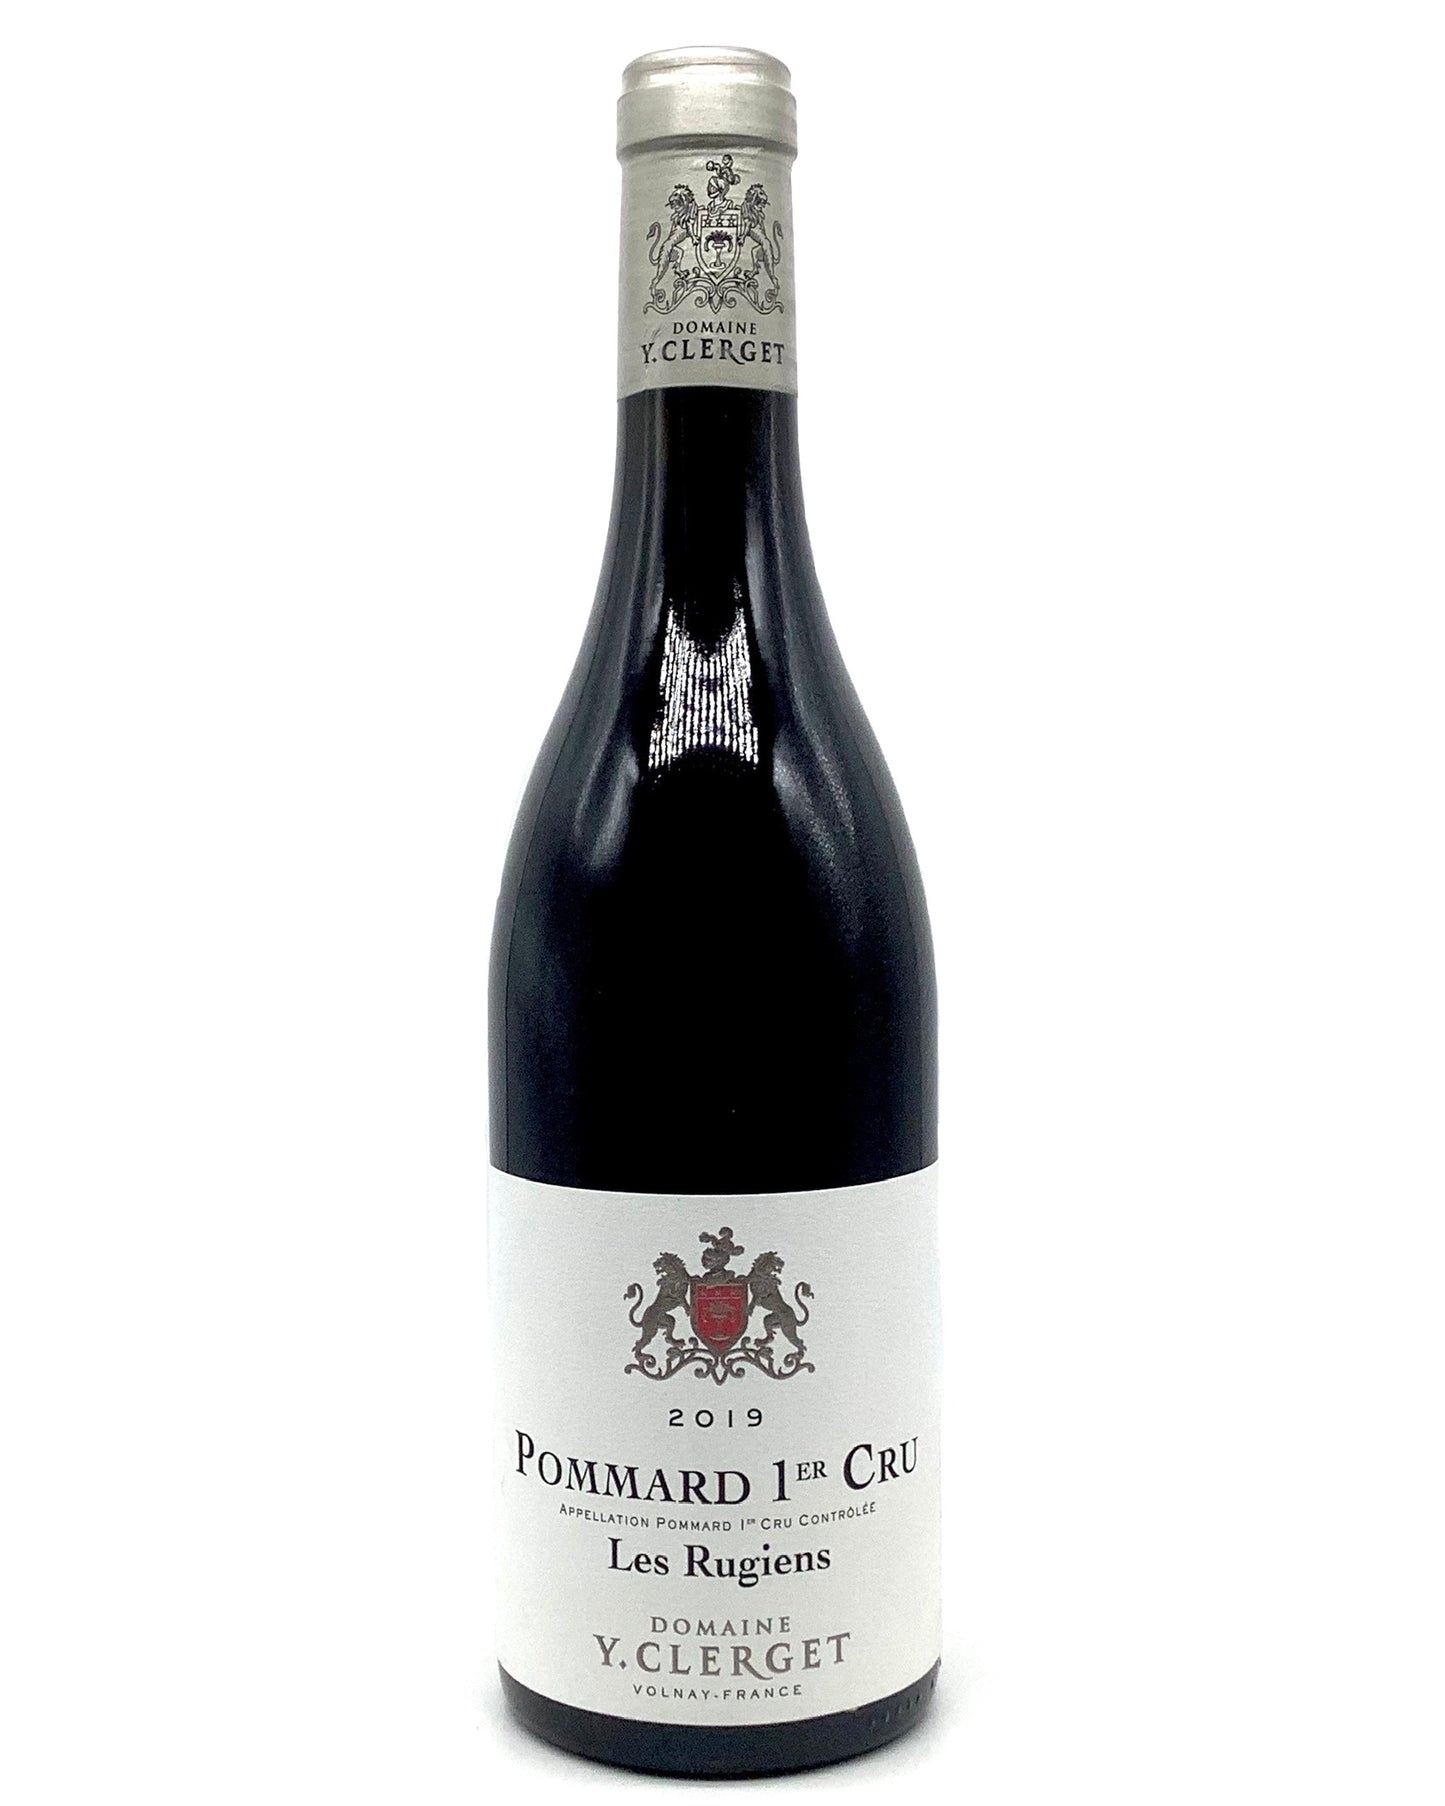 Domaine Y. Clerget, Pinot Noir, Pommard 1er Cru Les Rugiens, Côte de Beaune, Burgundy, France 2019